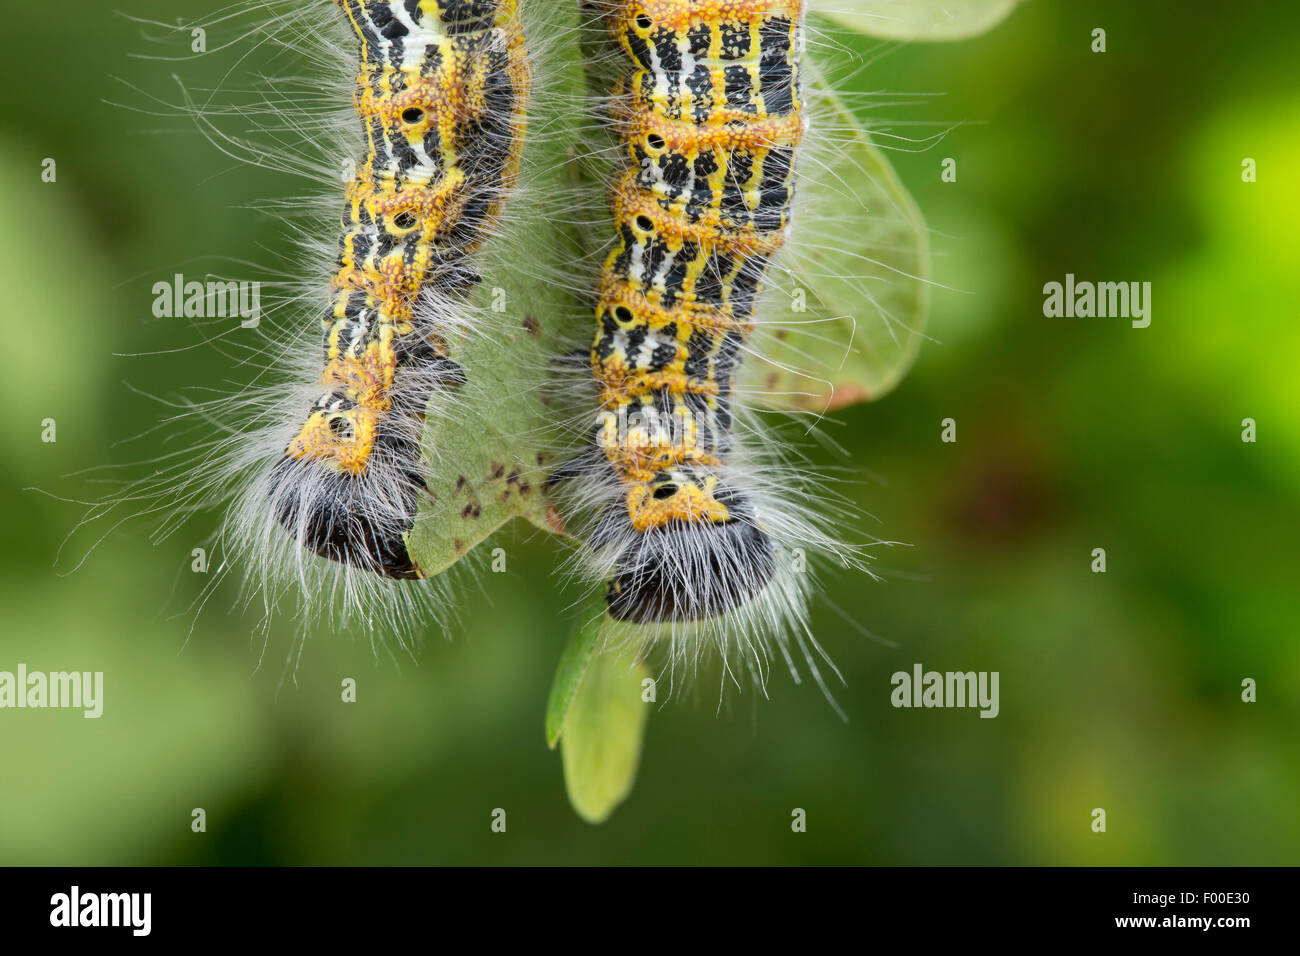 Buff-tip moth, Buff tip caterpillar (Phalera bucephala), caterpillars on an oak twig, Germany Stock Photo